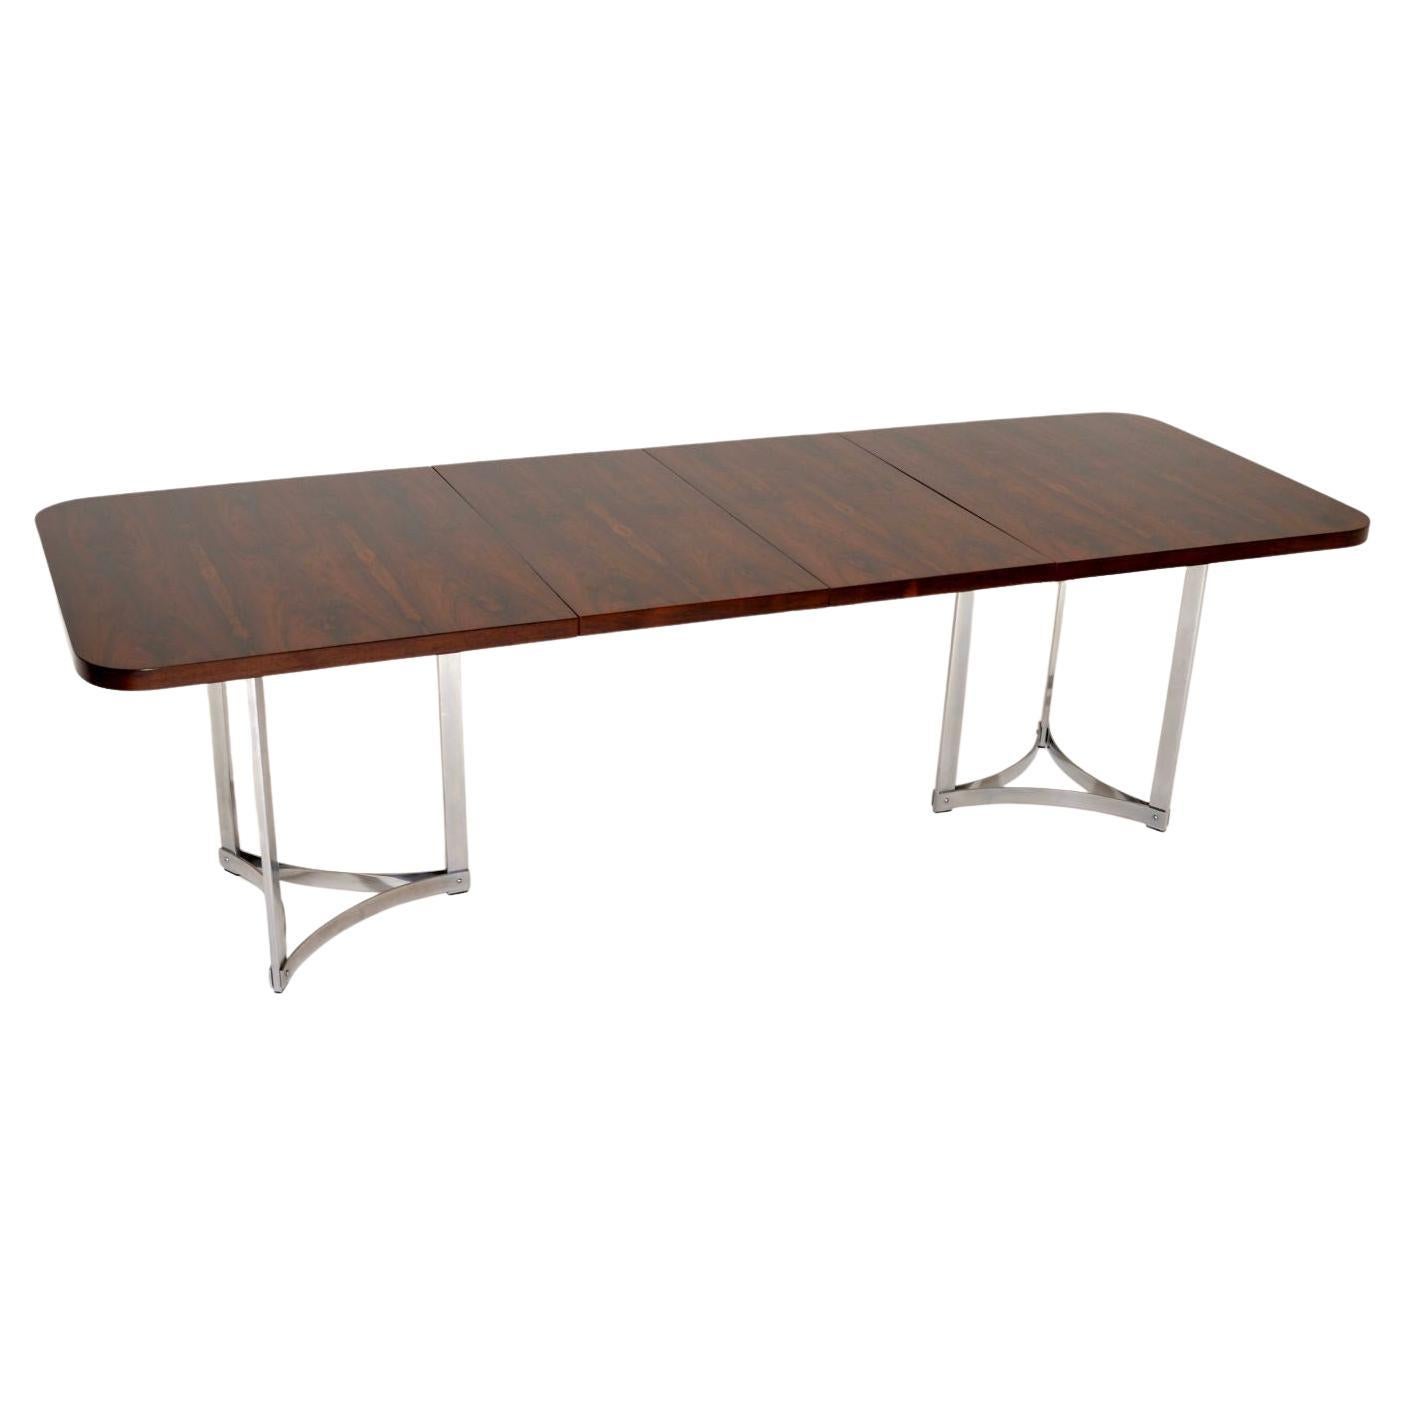 Merrow Associates Dining Table in Wood & Chrome